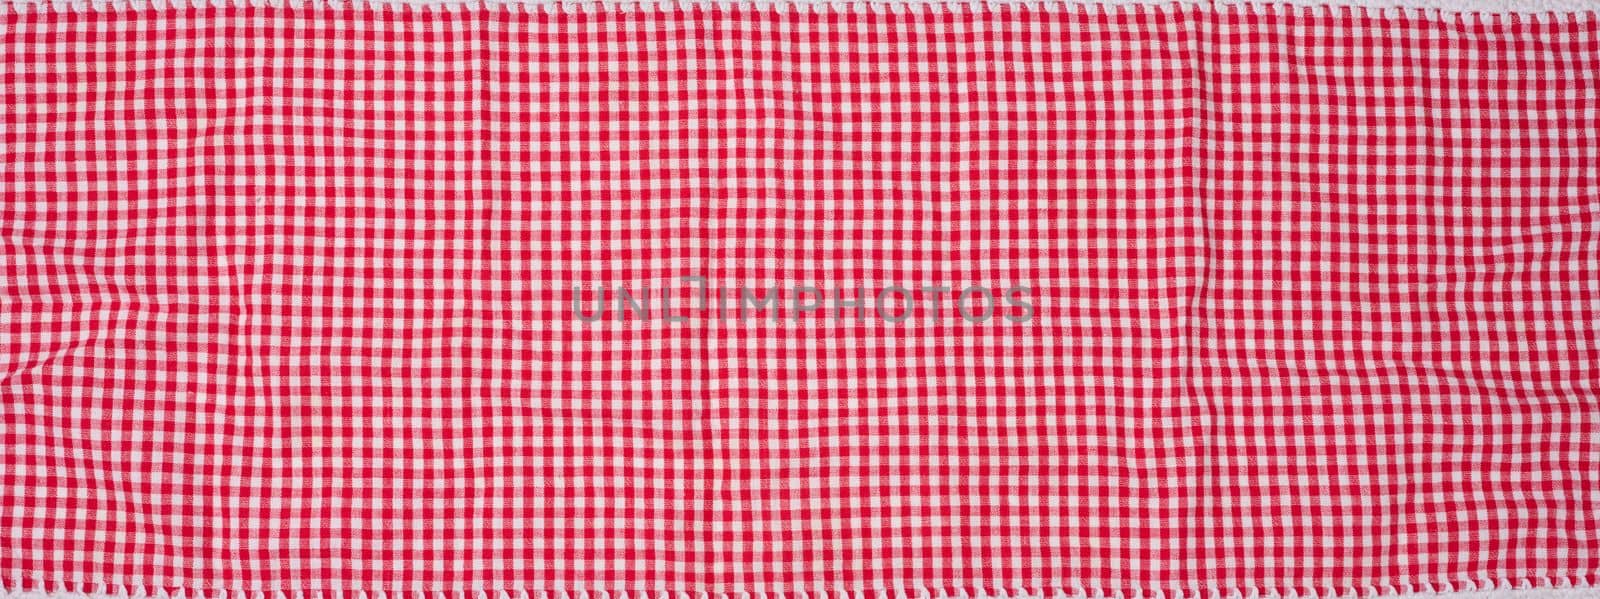 Cotton red-white kitchen towel, close up by ndanko